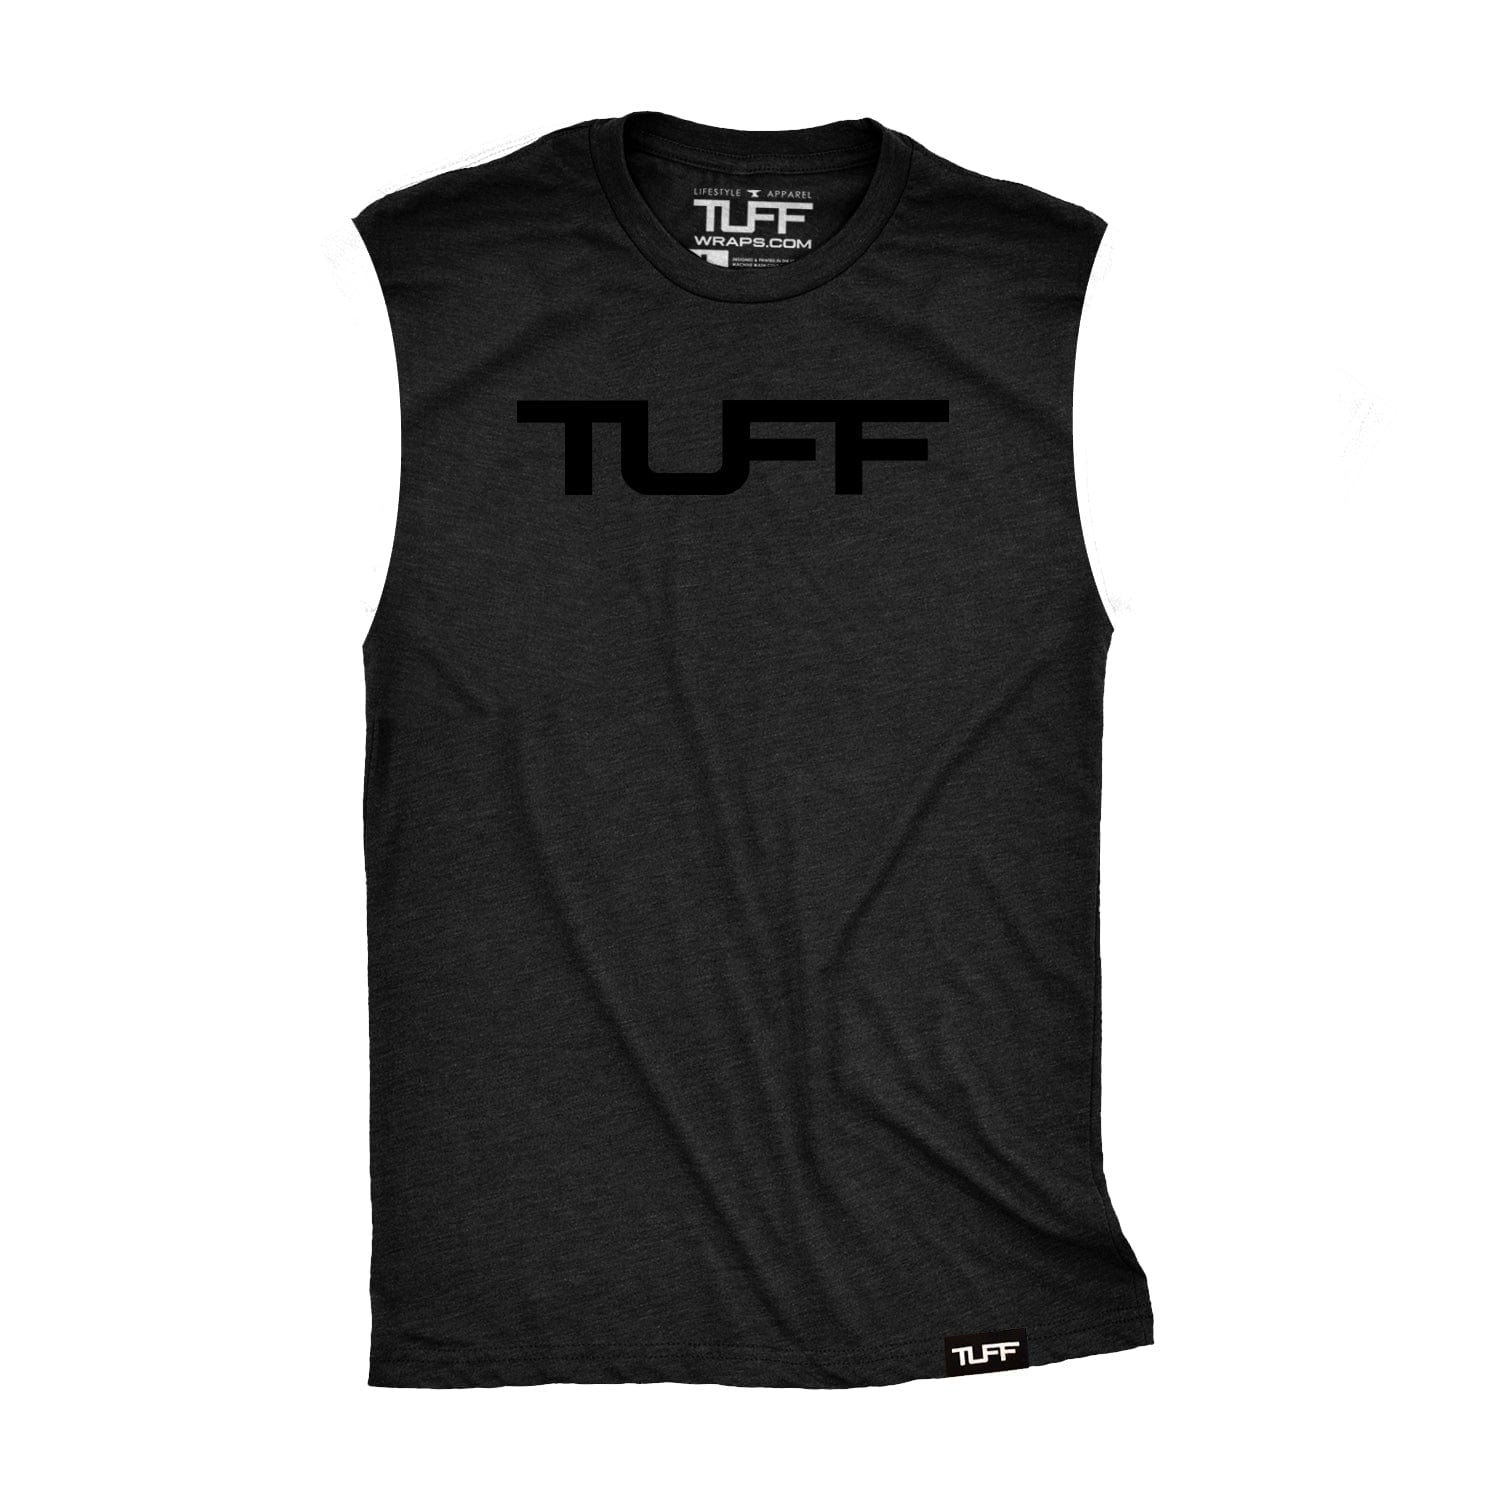 TUFF Blackout Raw Edge Muscle Tank TuffWraps.com